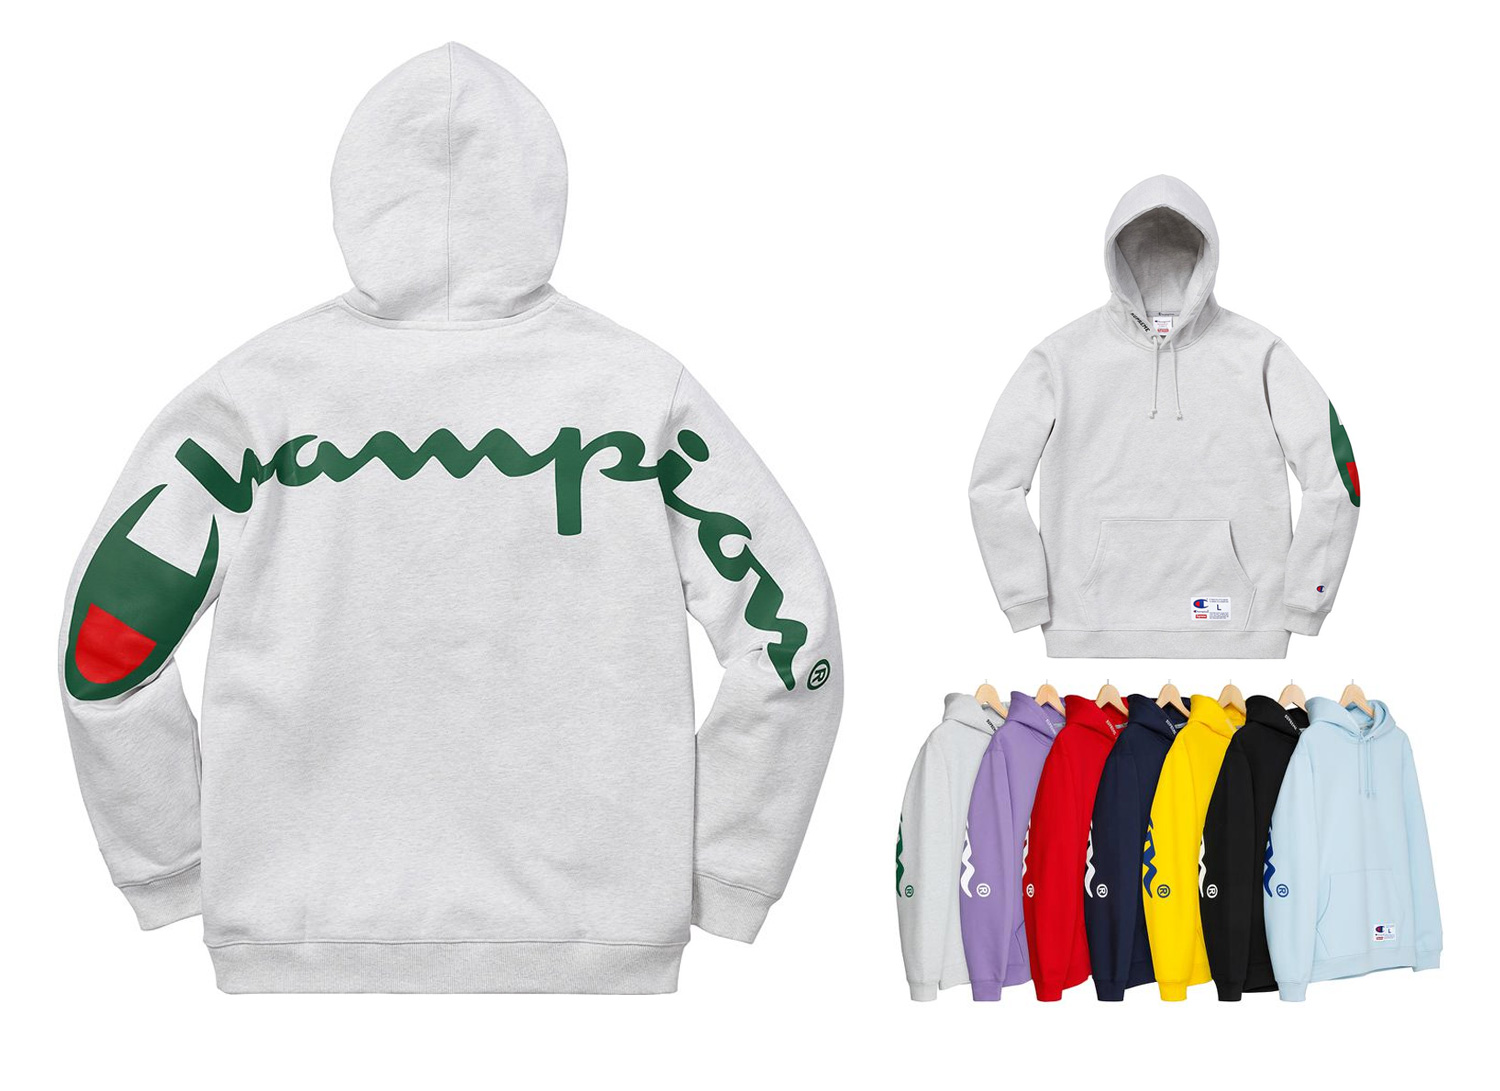 Supreme®/Champion® Hooded Sweatshirt